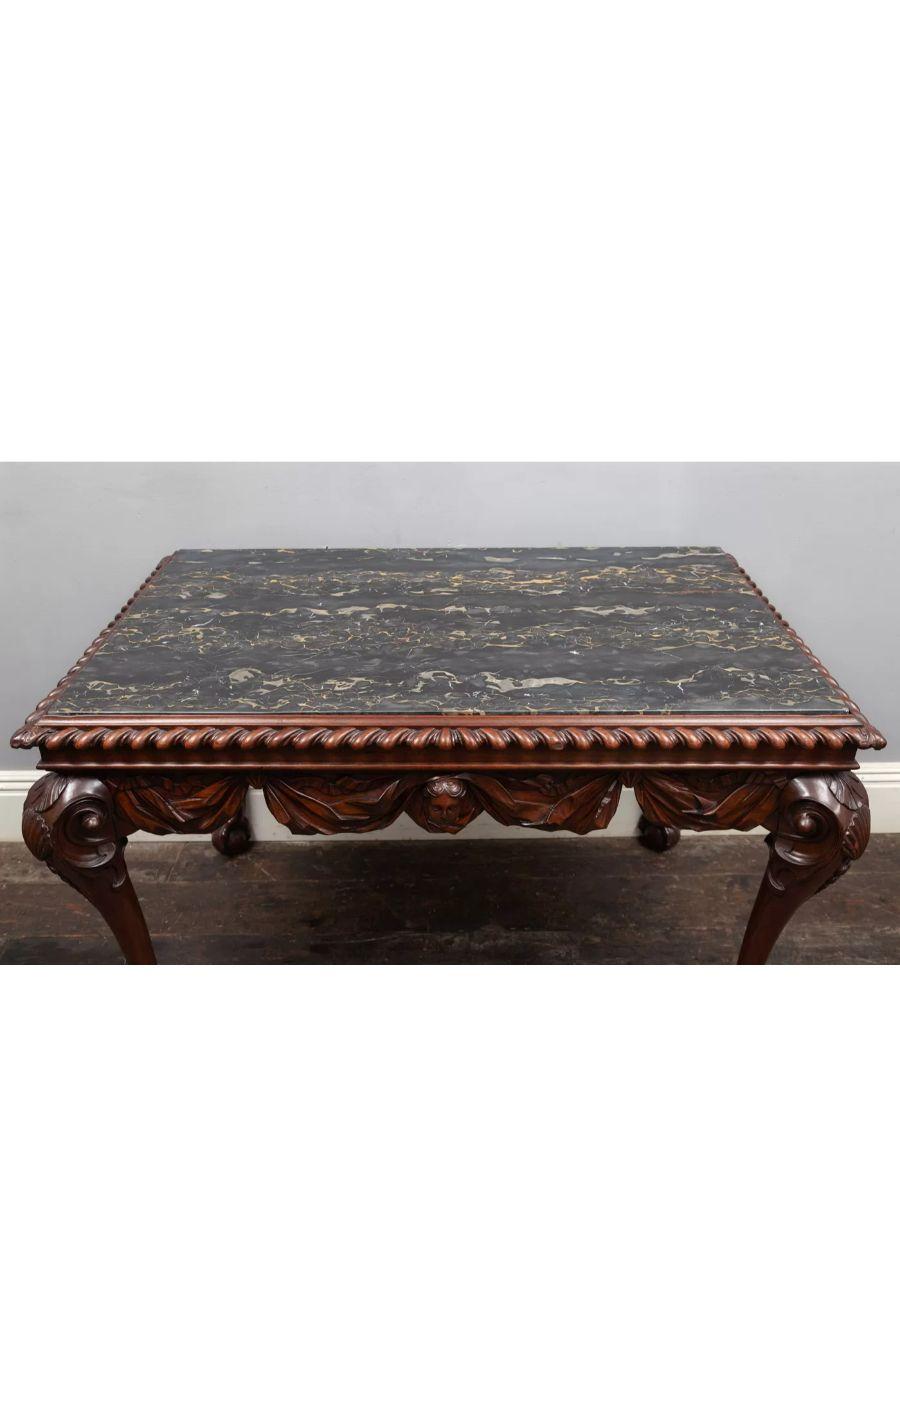 Palladian Antique Carved Walnut Console Table with Portoro Nero Marble Top, circa 1860